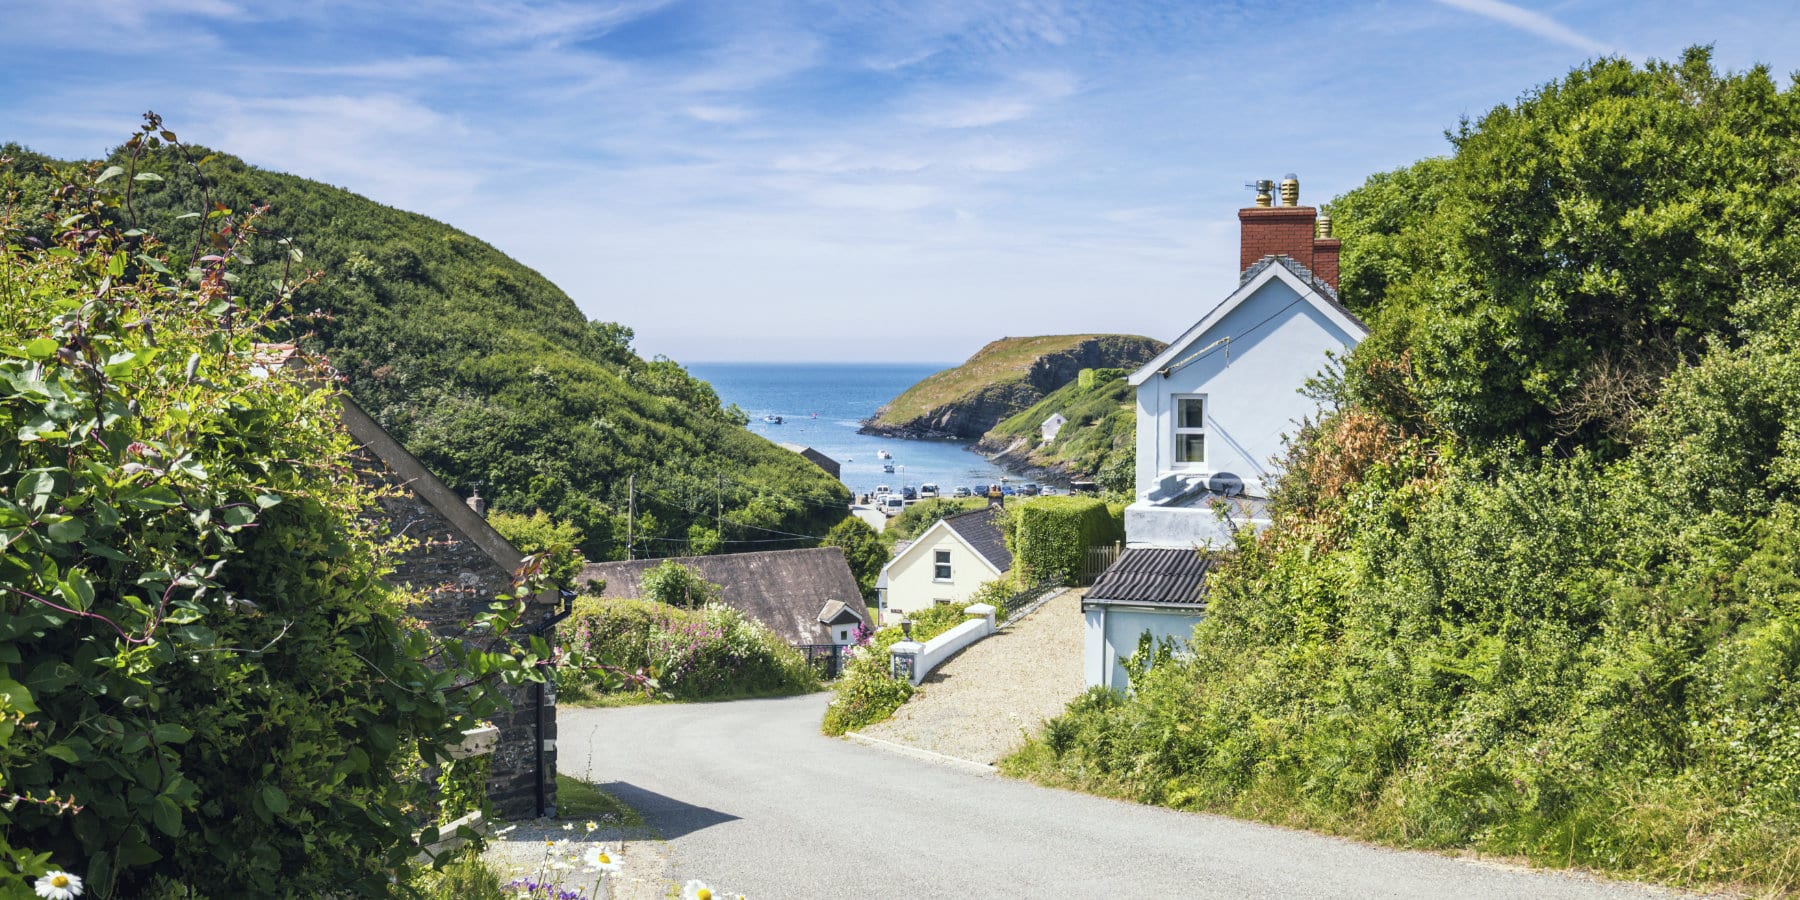 Welsh Coastal Village at Bright Sunny Day